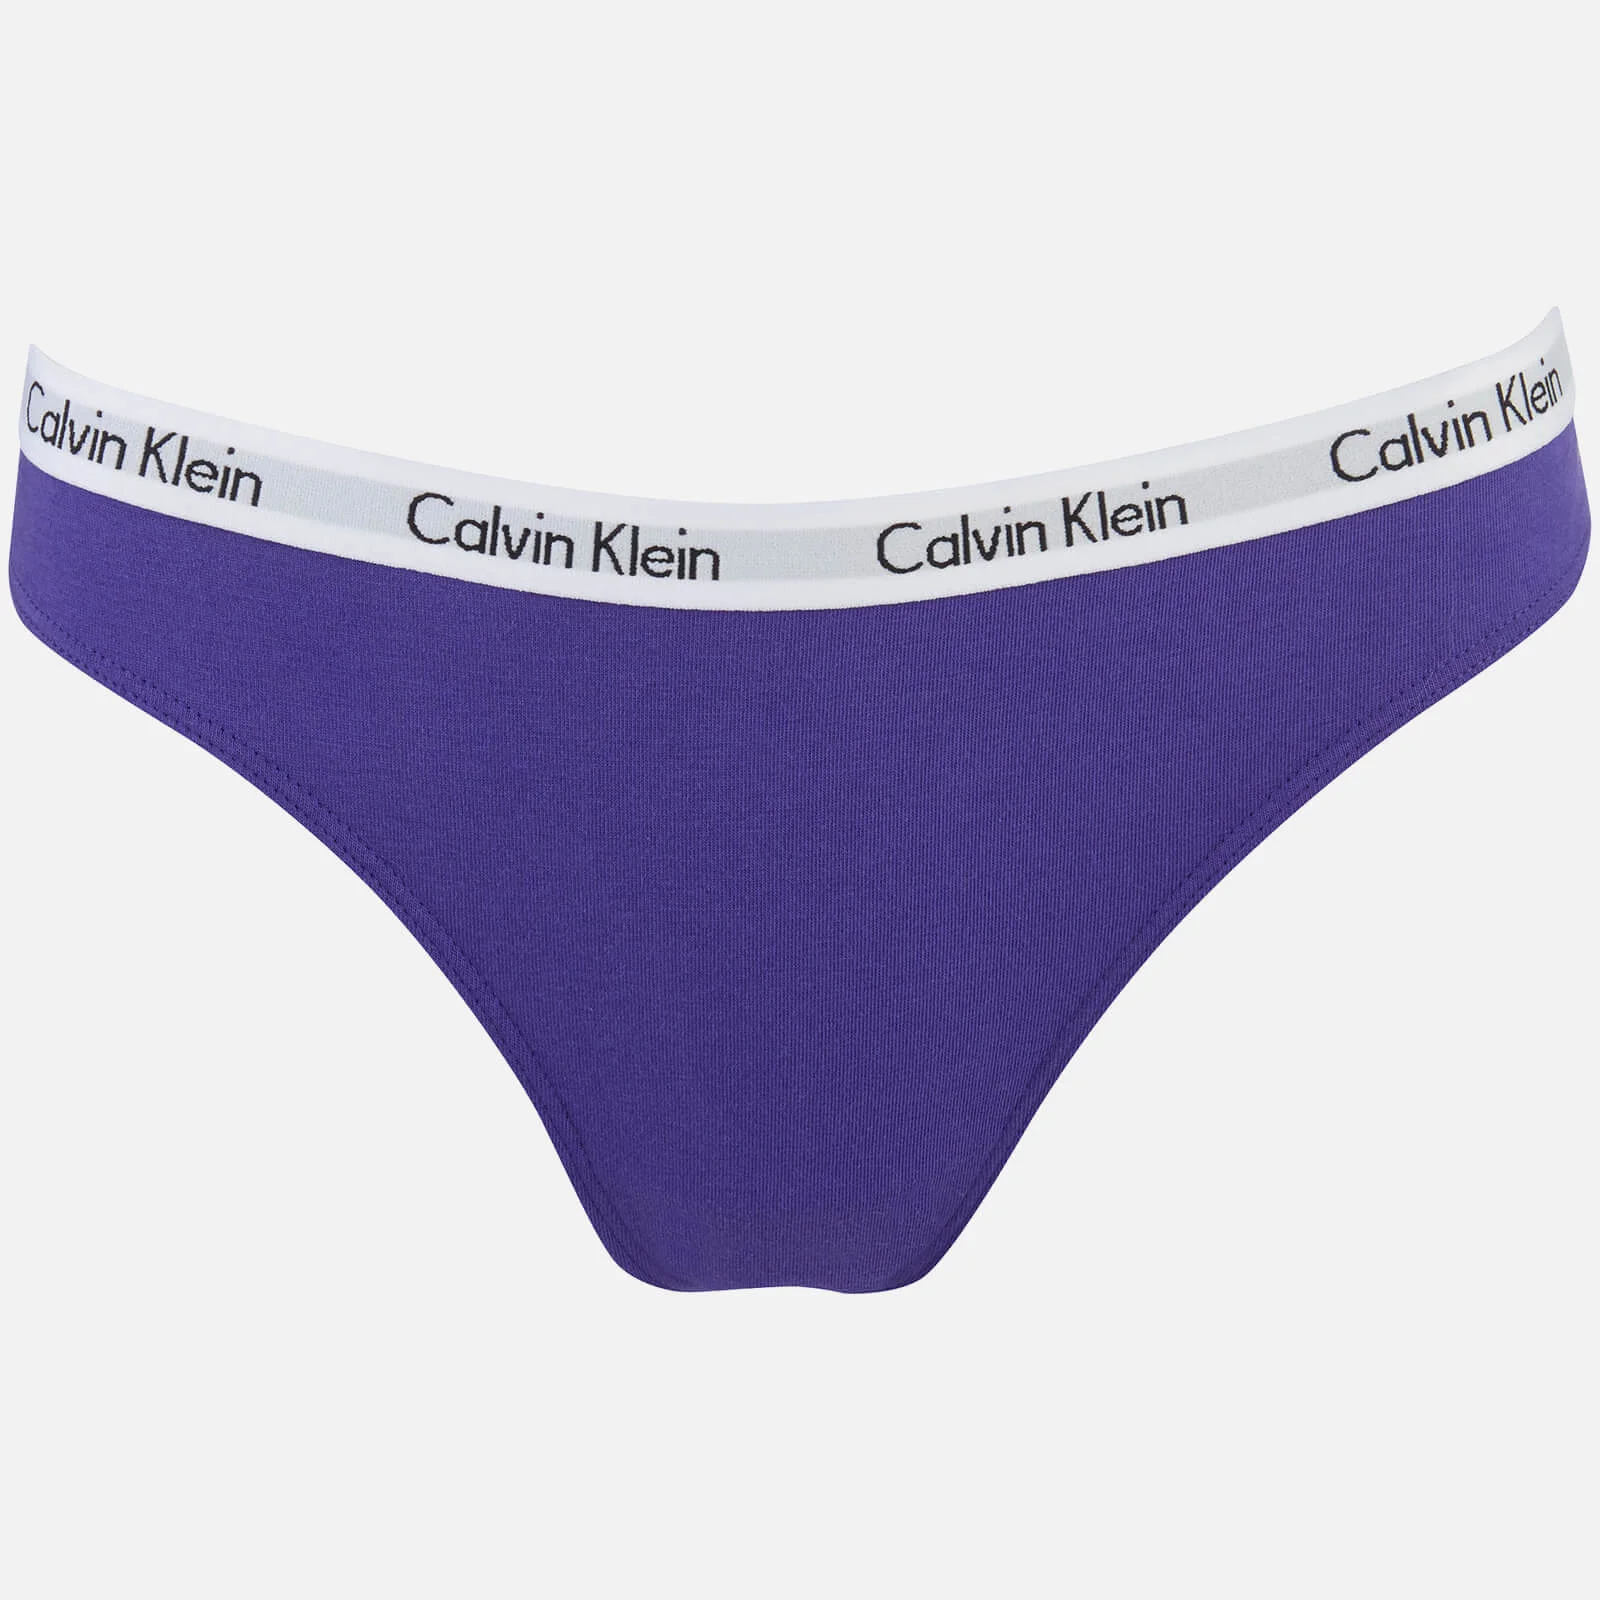 Calvin Klein Women's Thong 3 Pack - Stimulate/White/Wonder Image 1